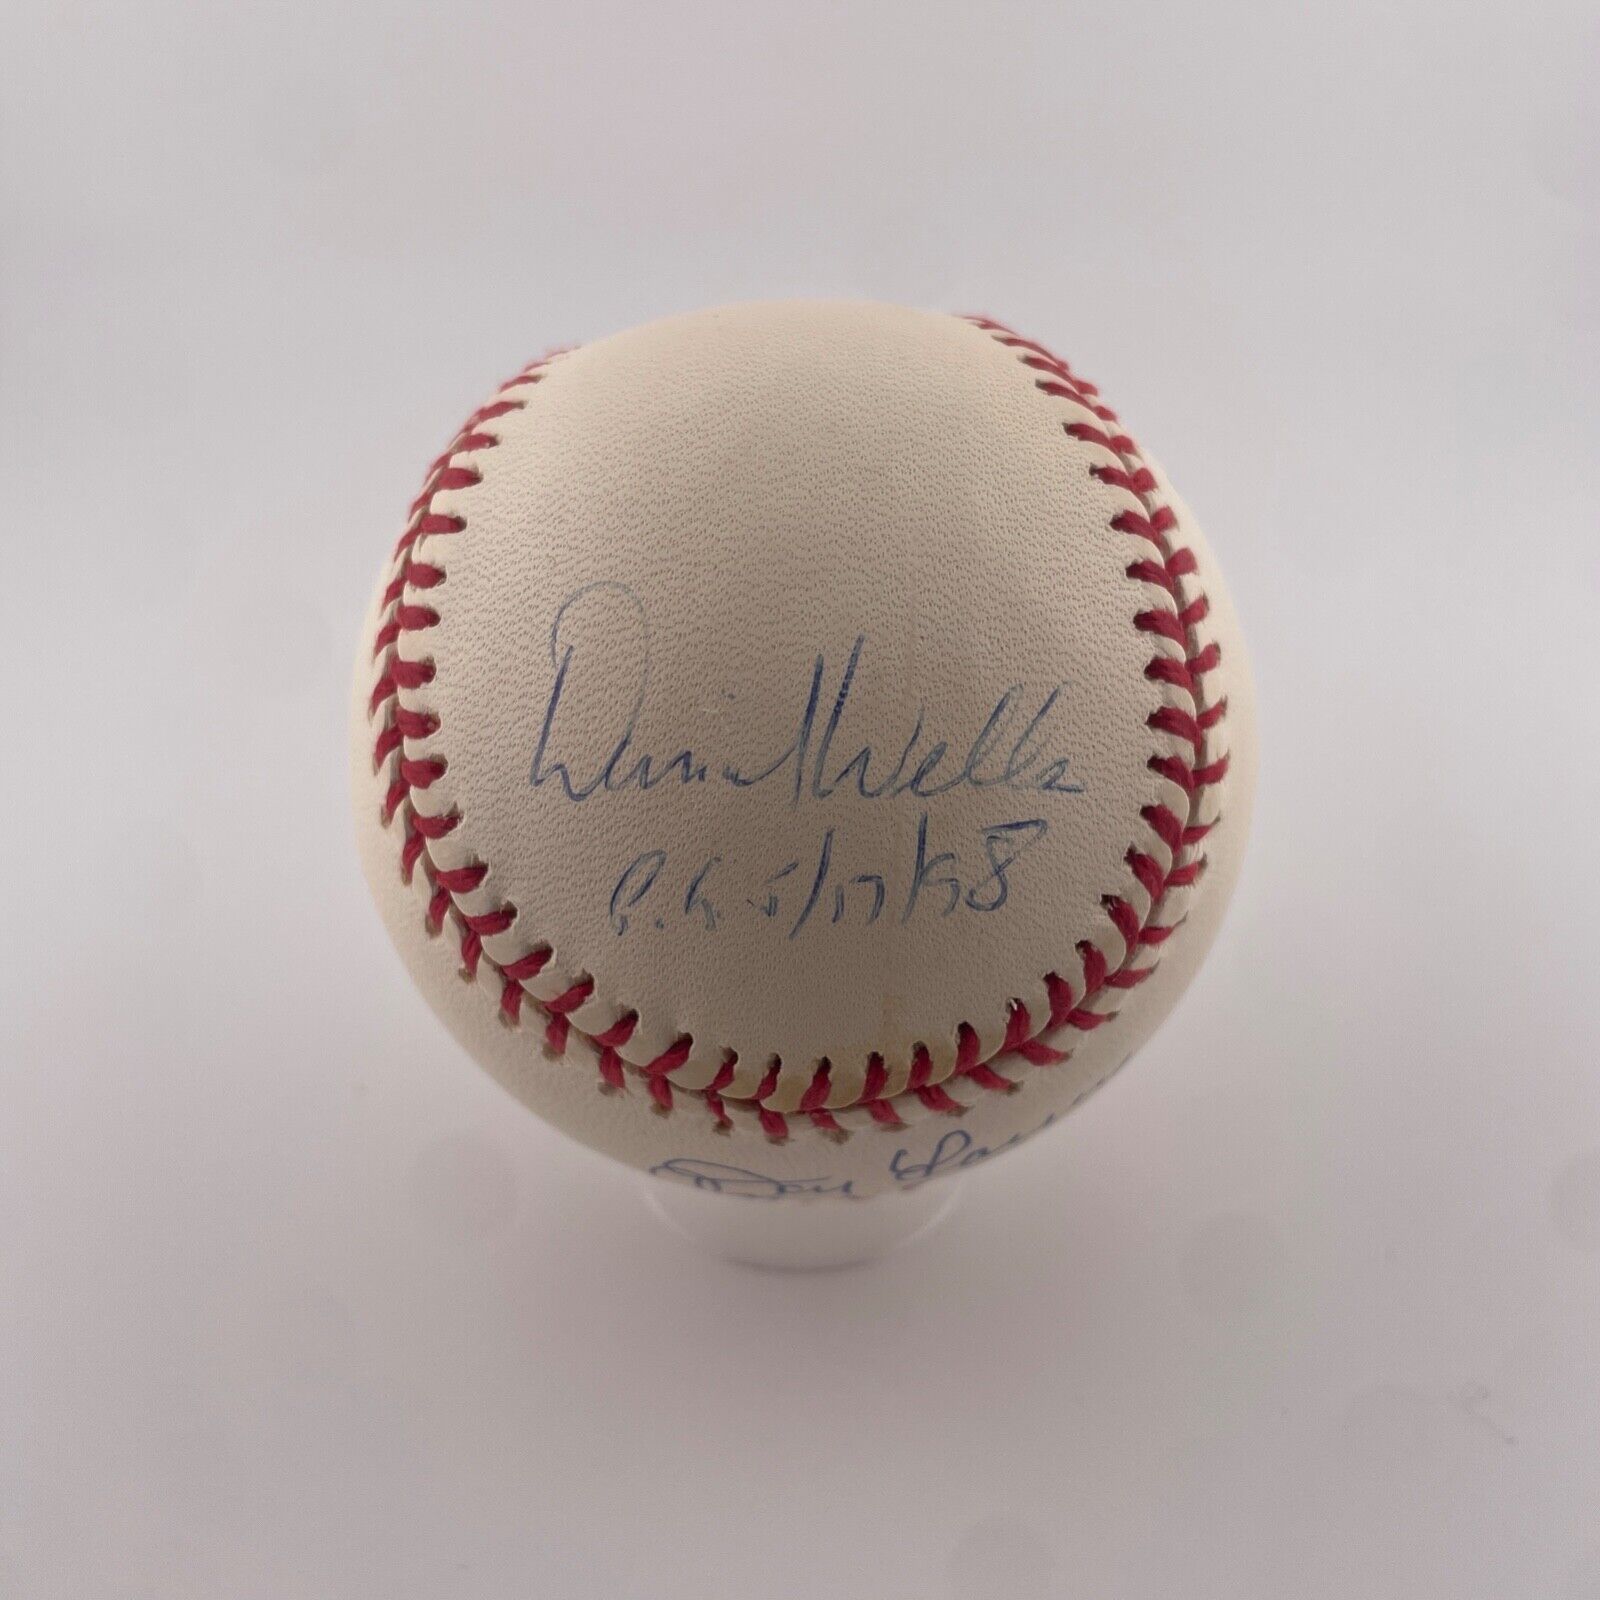 Don Larsen + David Wells Signed Inscribed Baseball. Yogi Berra Day. JSA.